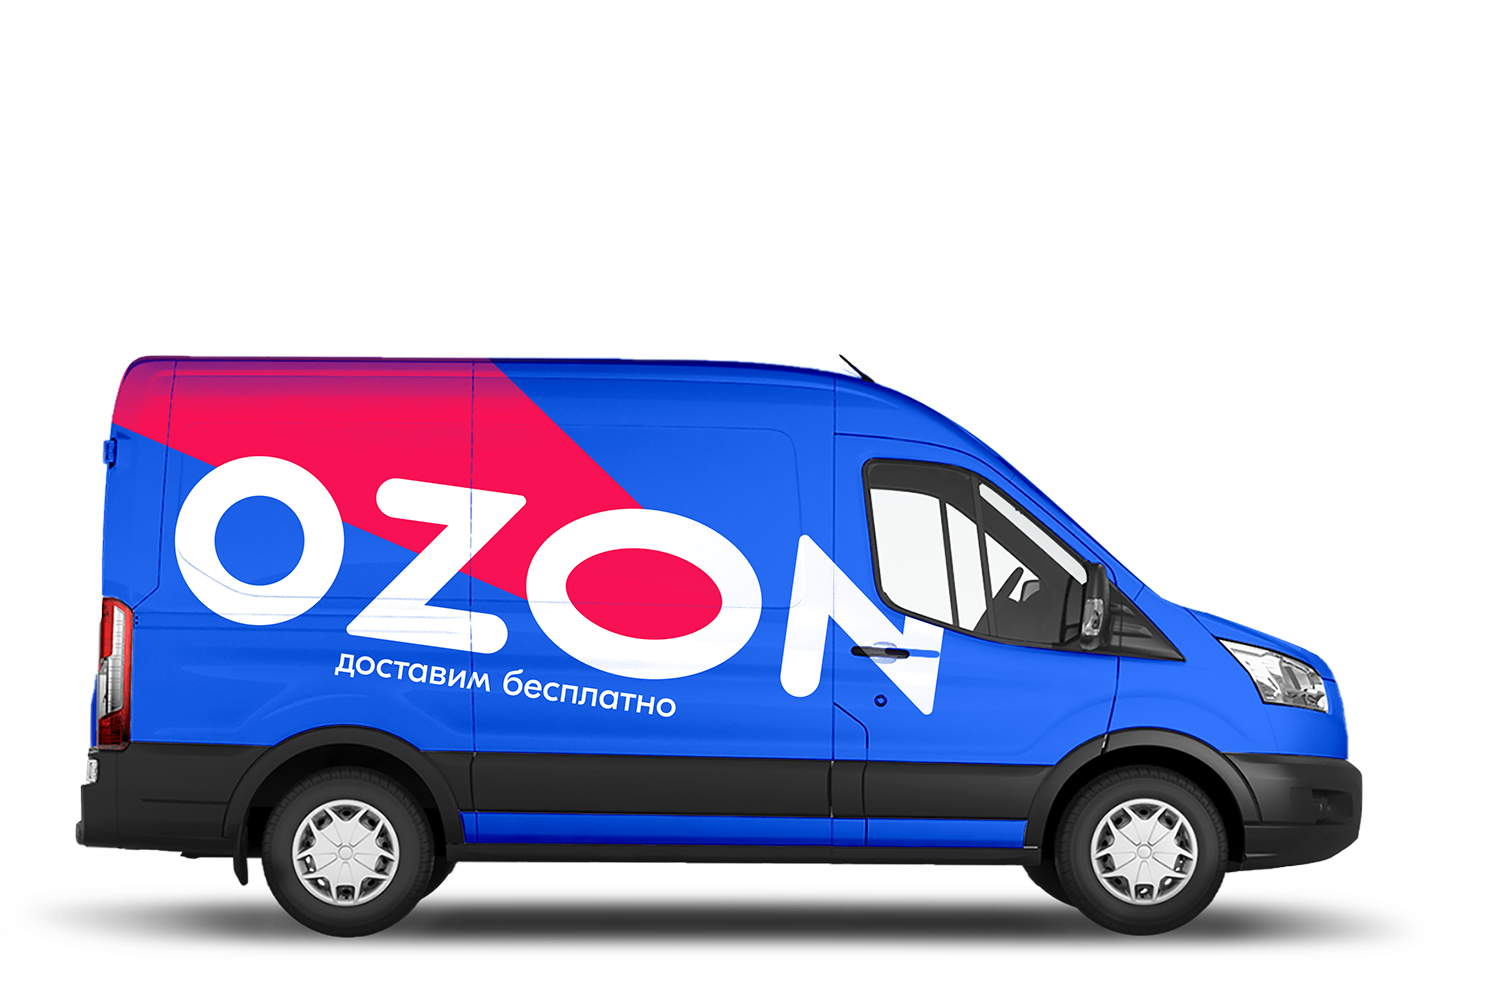 Авто на озоне цена. Фургон Озон. Машина Озон доставка. Форд Транзит Озон. Фирменный фургон.